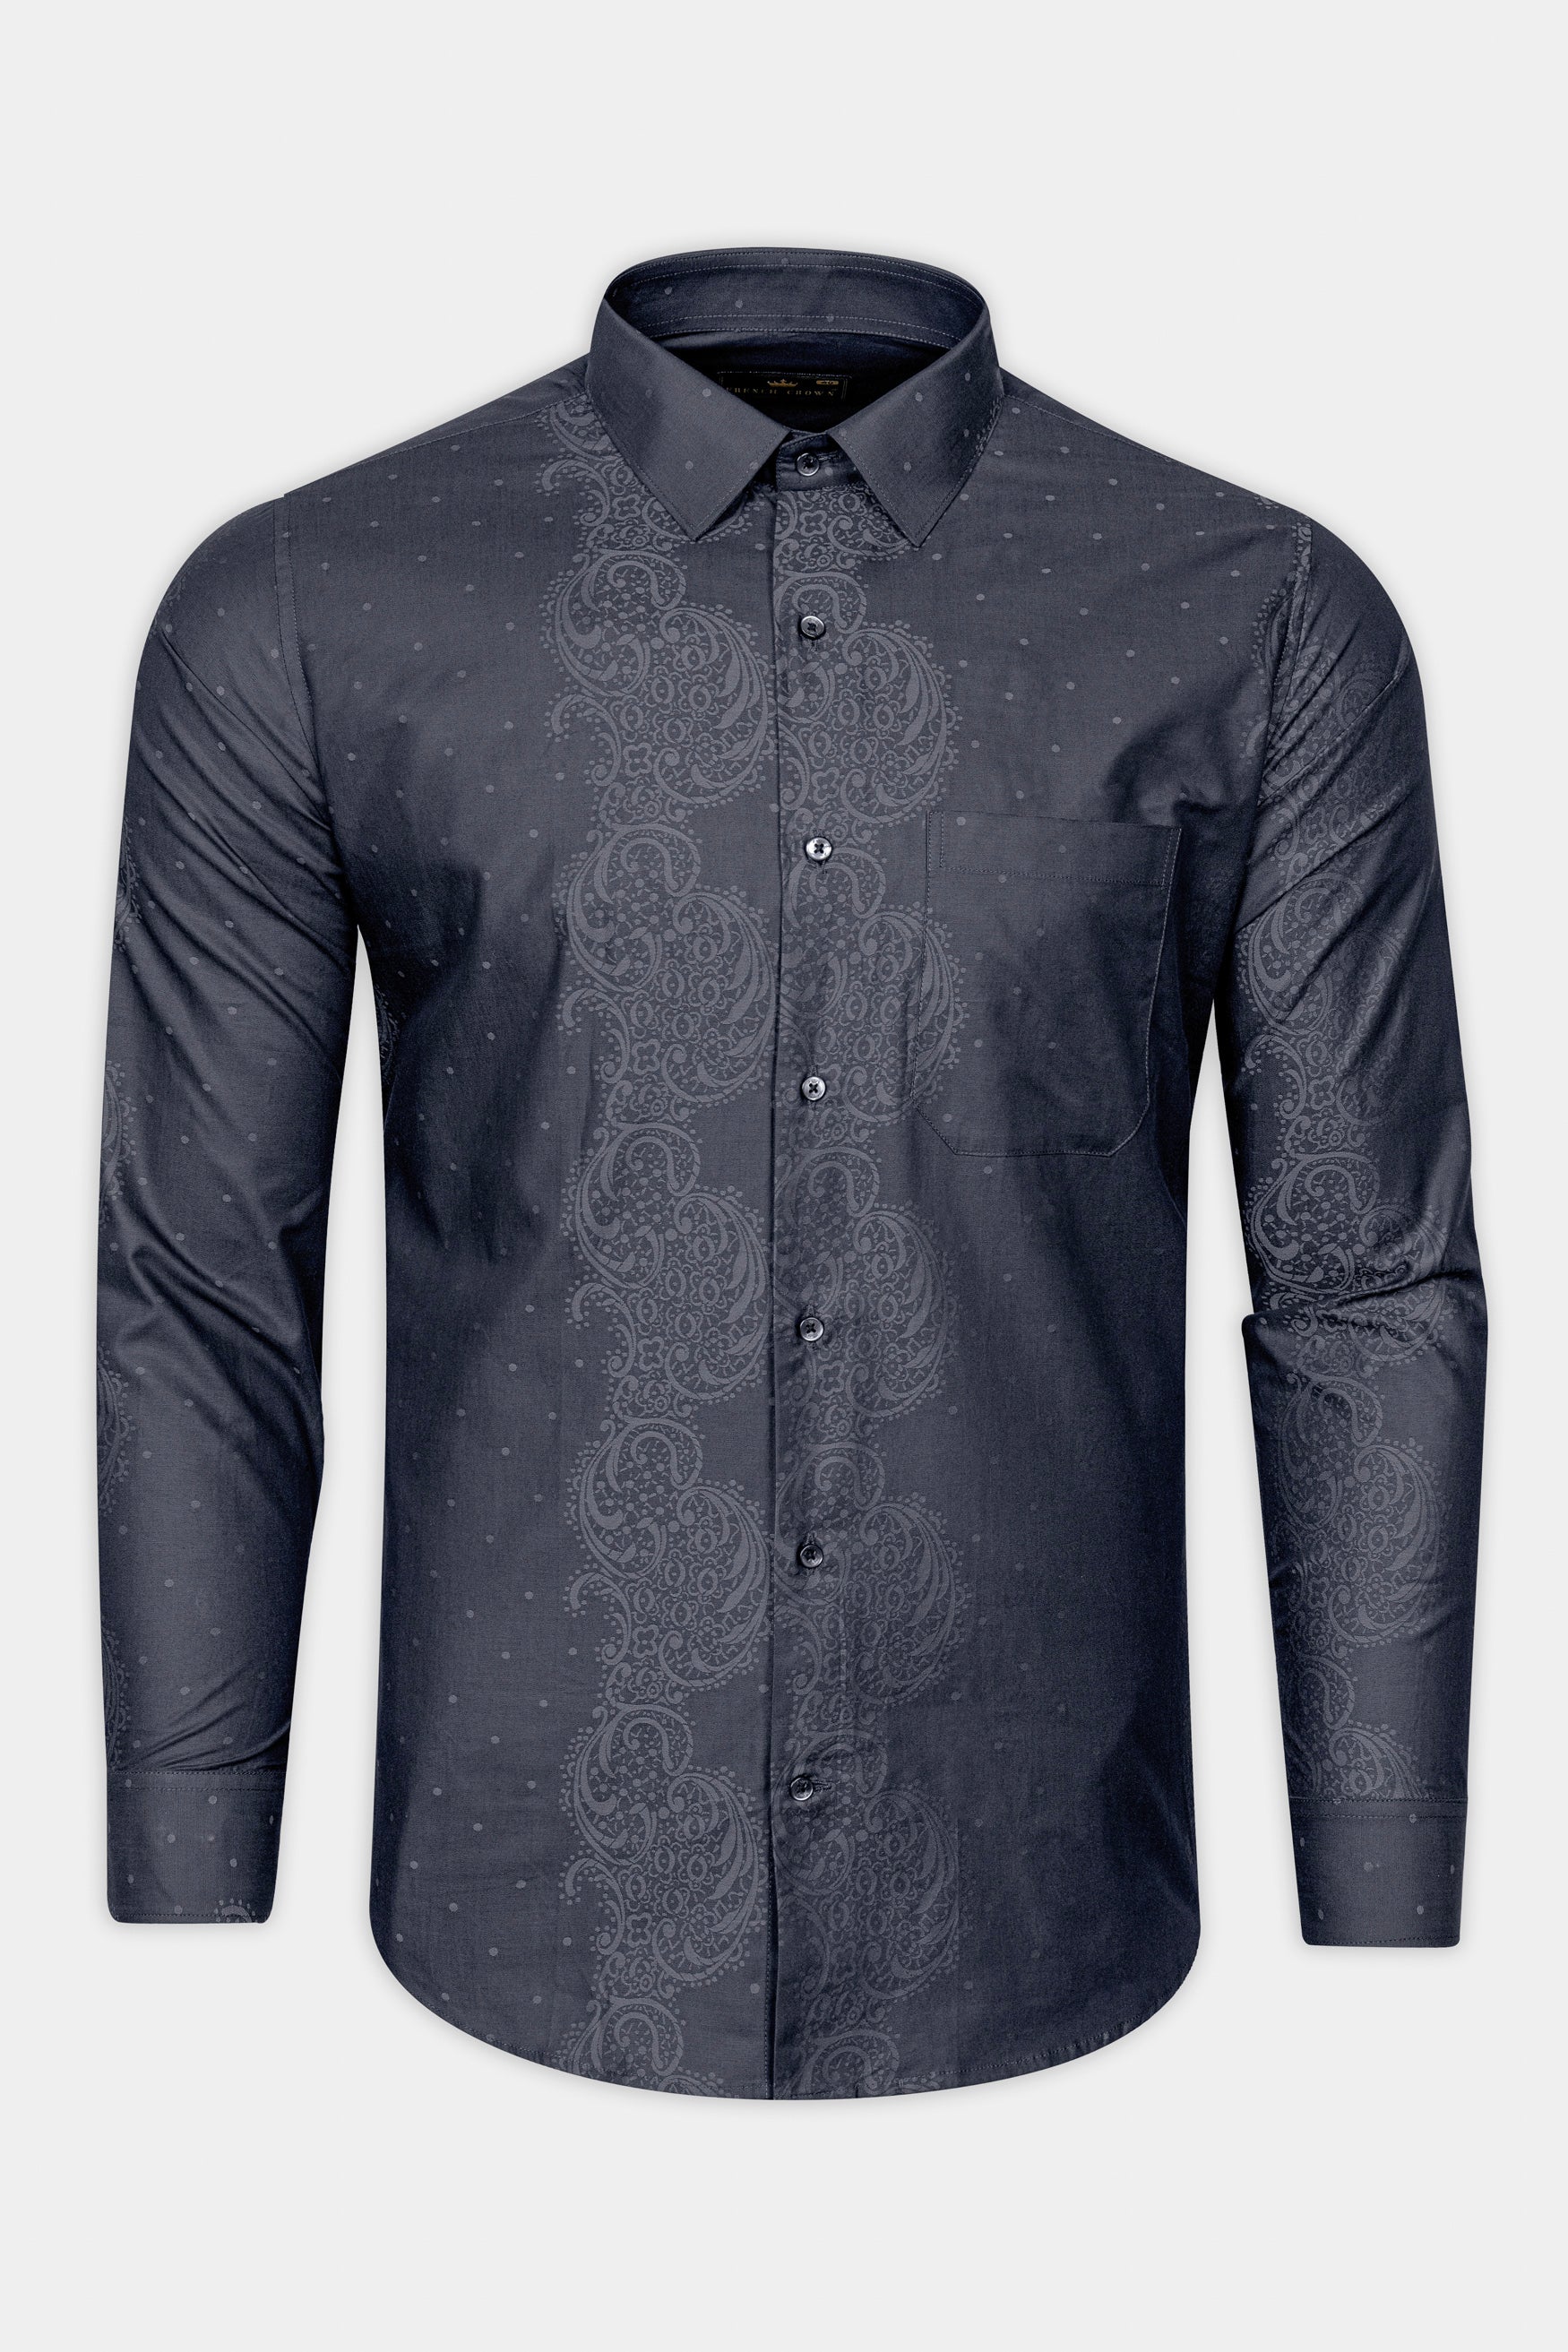 Trout Gray lack Paisley Jacquard Textured Premium Giza Cotton Shirt